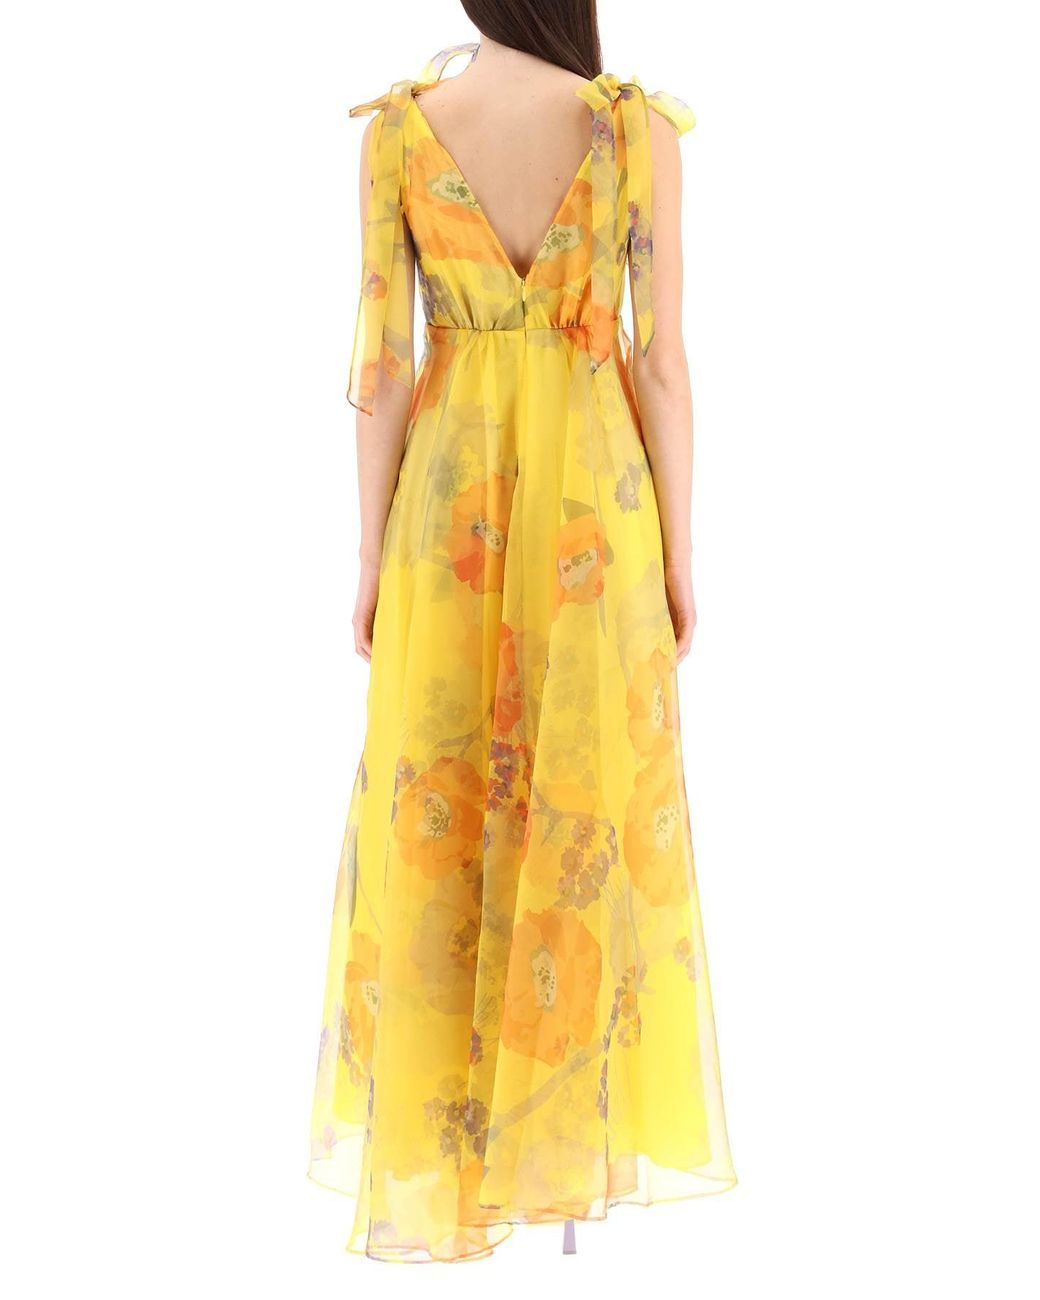 Spacedye Movement Dress - Flower Yellow – OMgoing